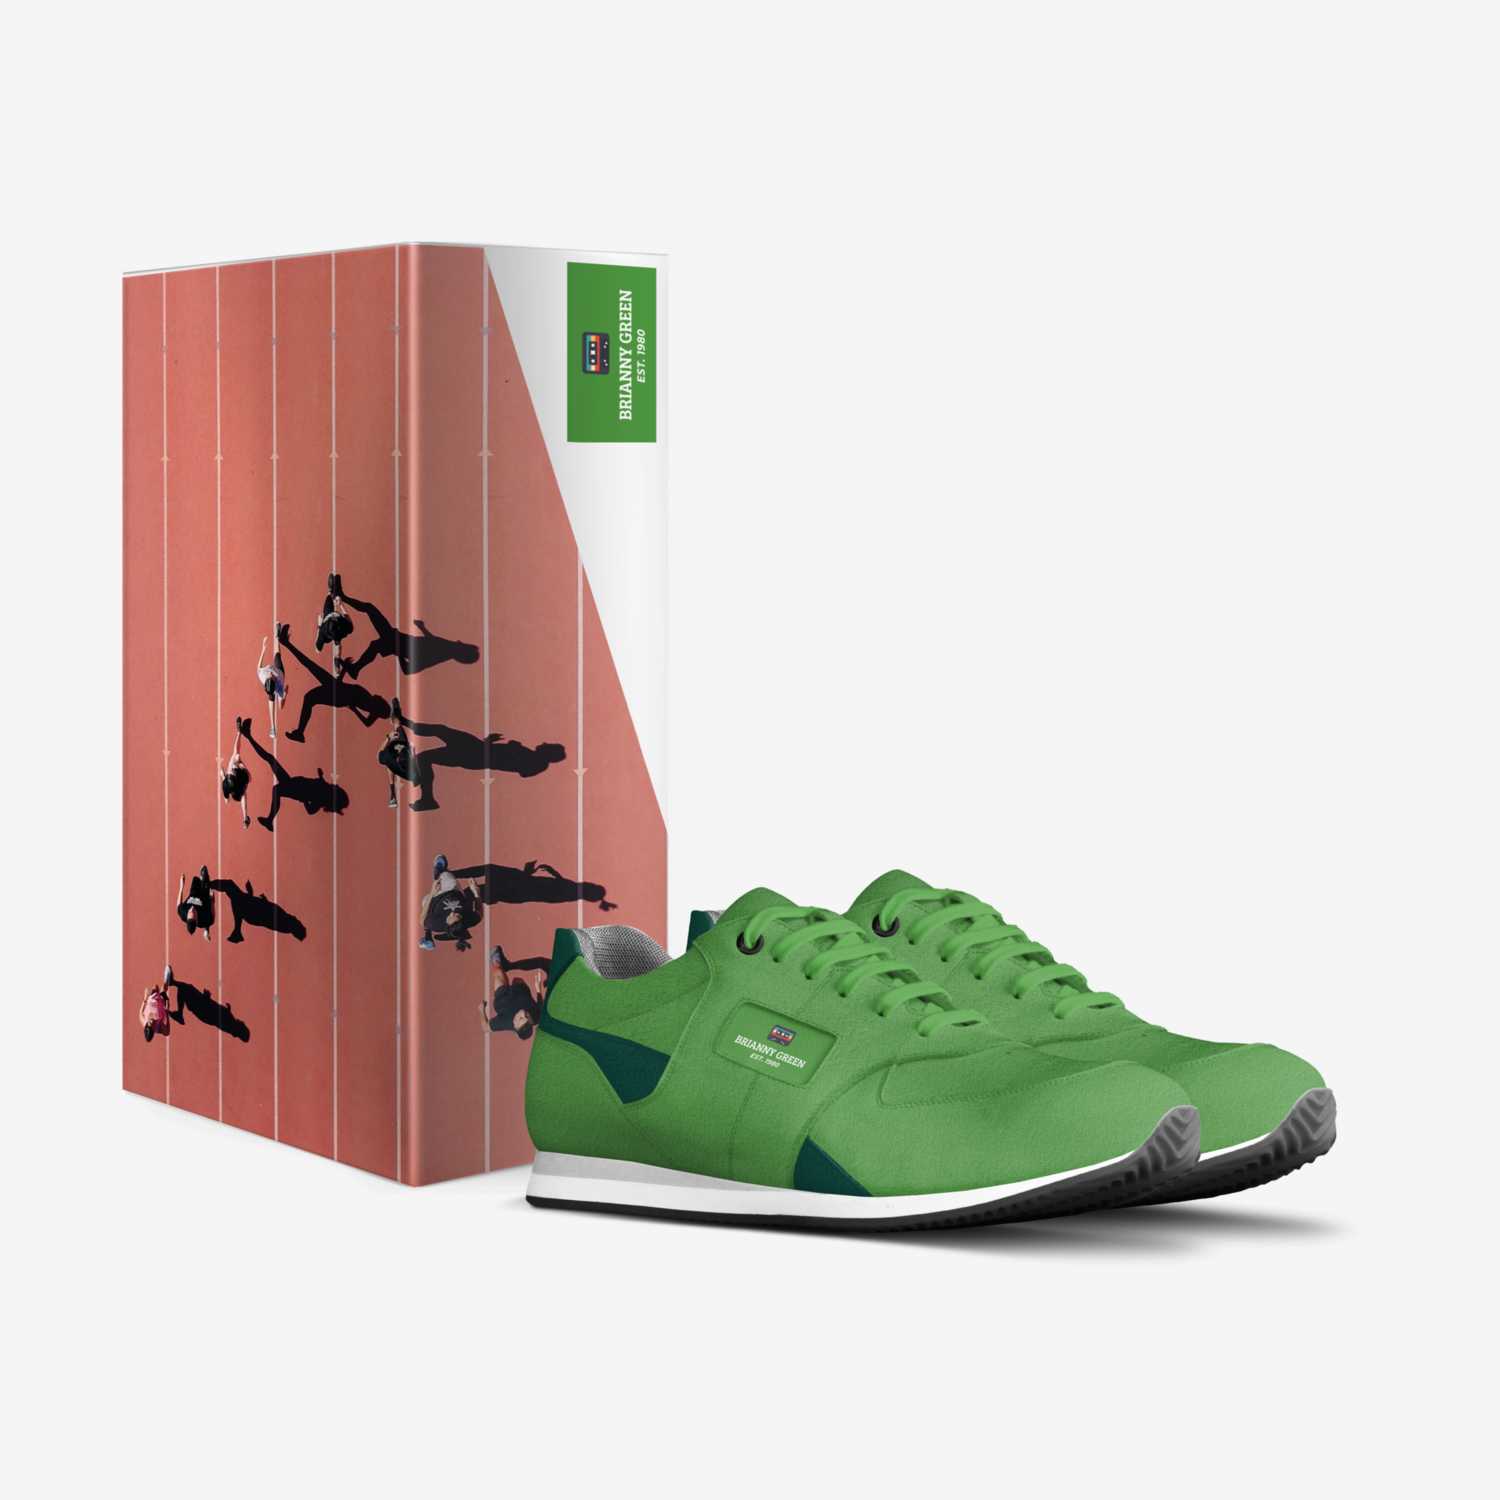 BRIANNY GREEN custom made in Italy shoes by John Samano | Box view